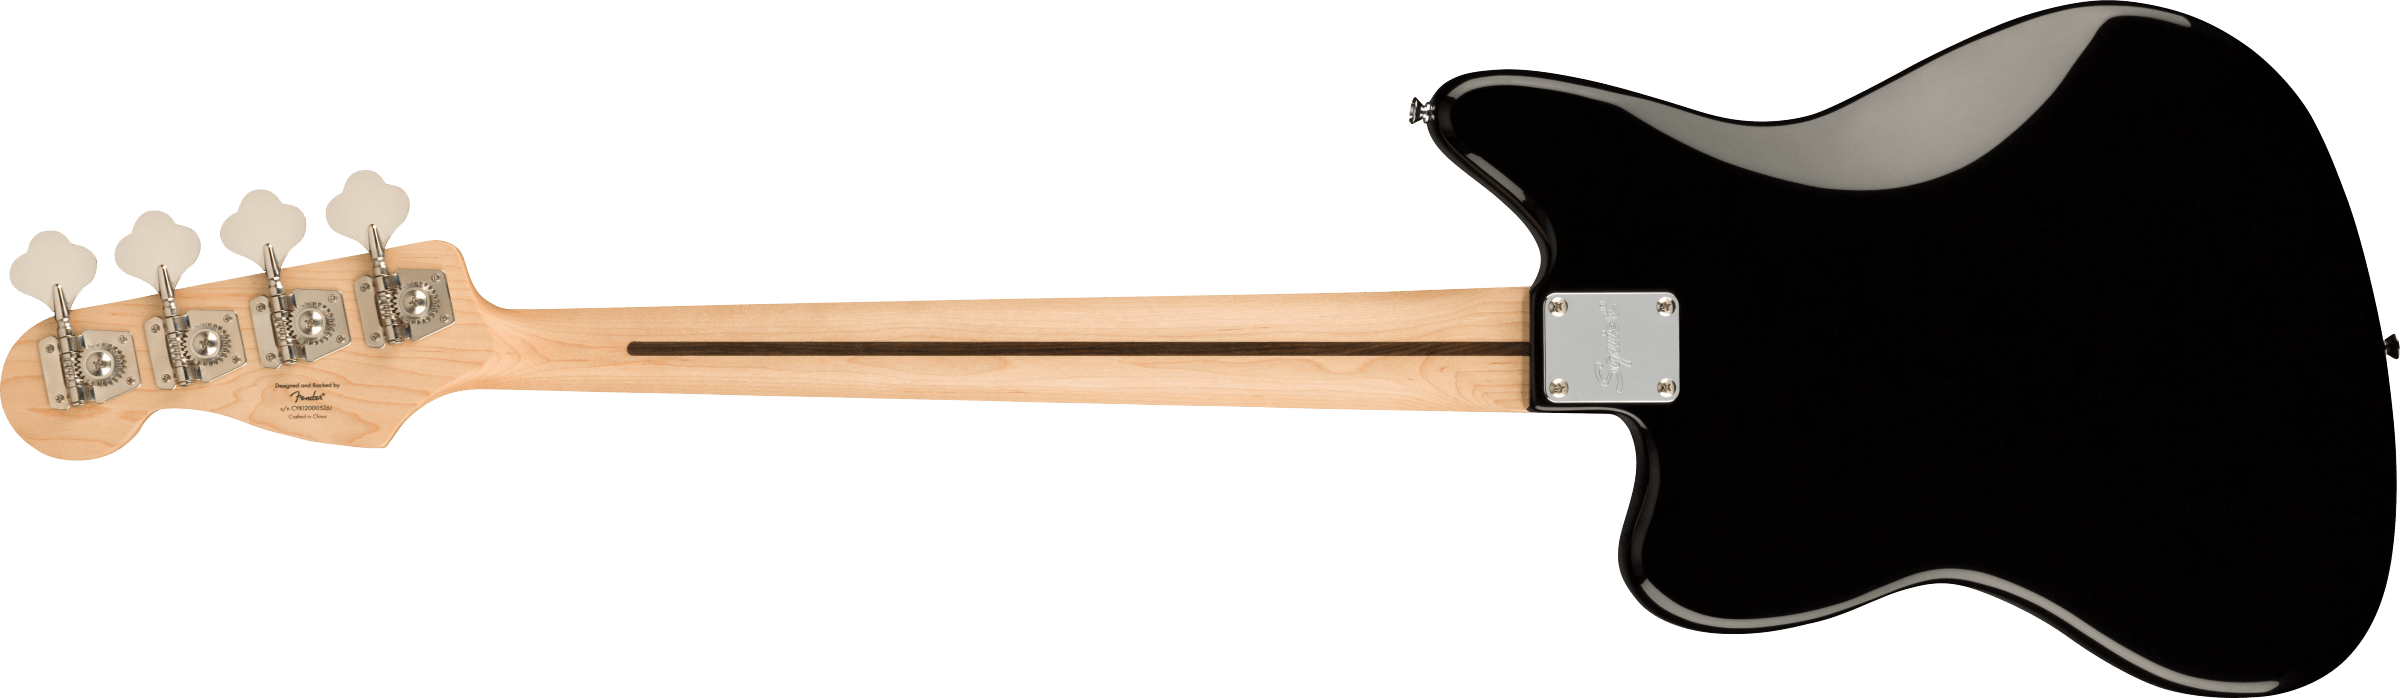 Squier Affinity Series Jaguar Bass H Maple Fingerboard Black Pickguard Black